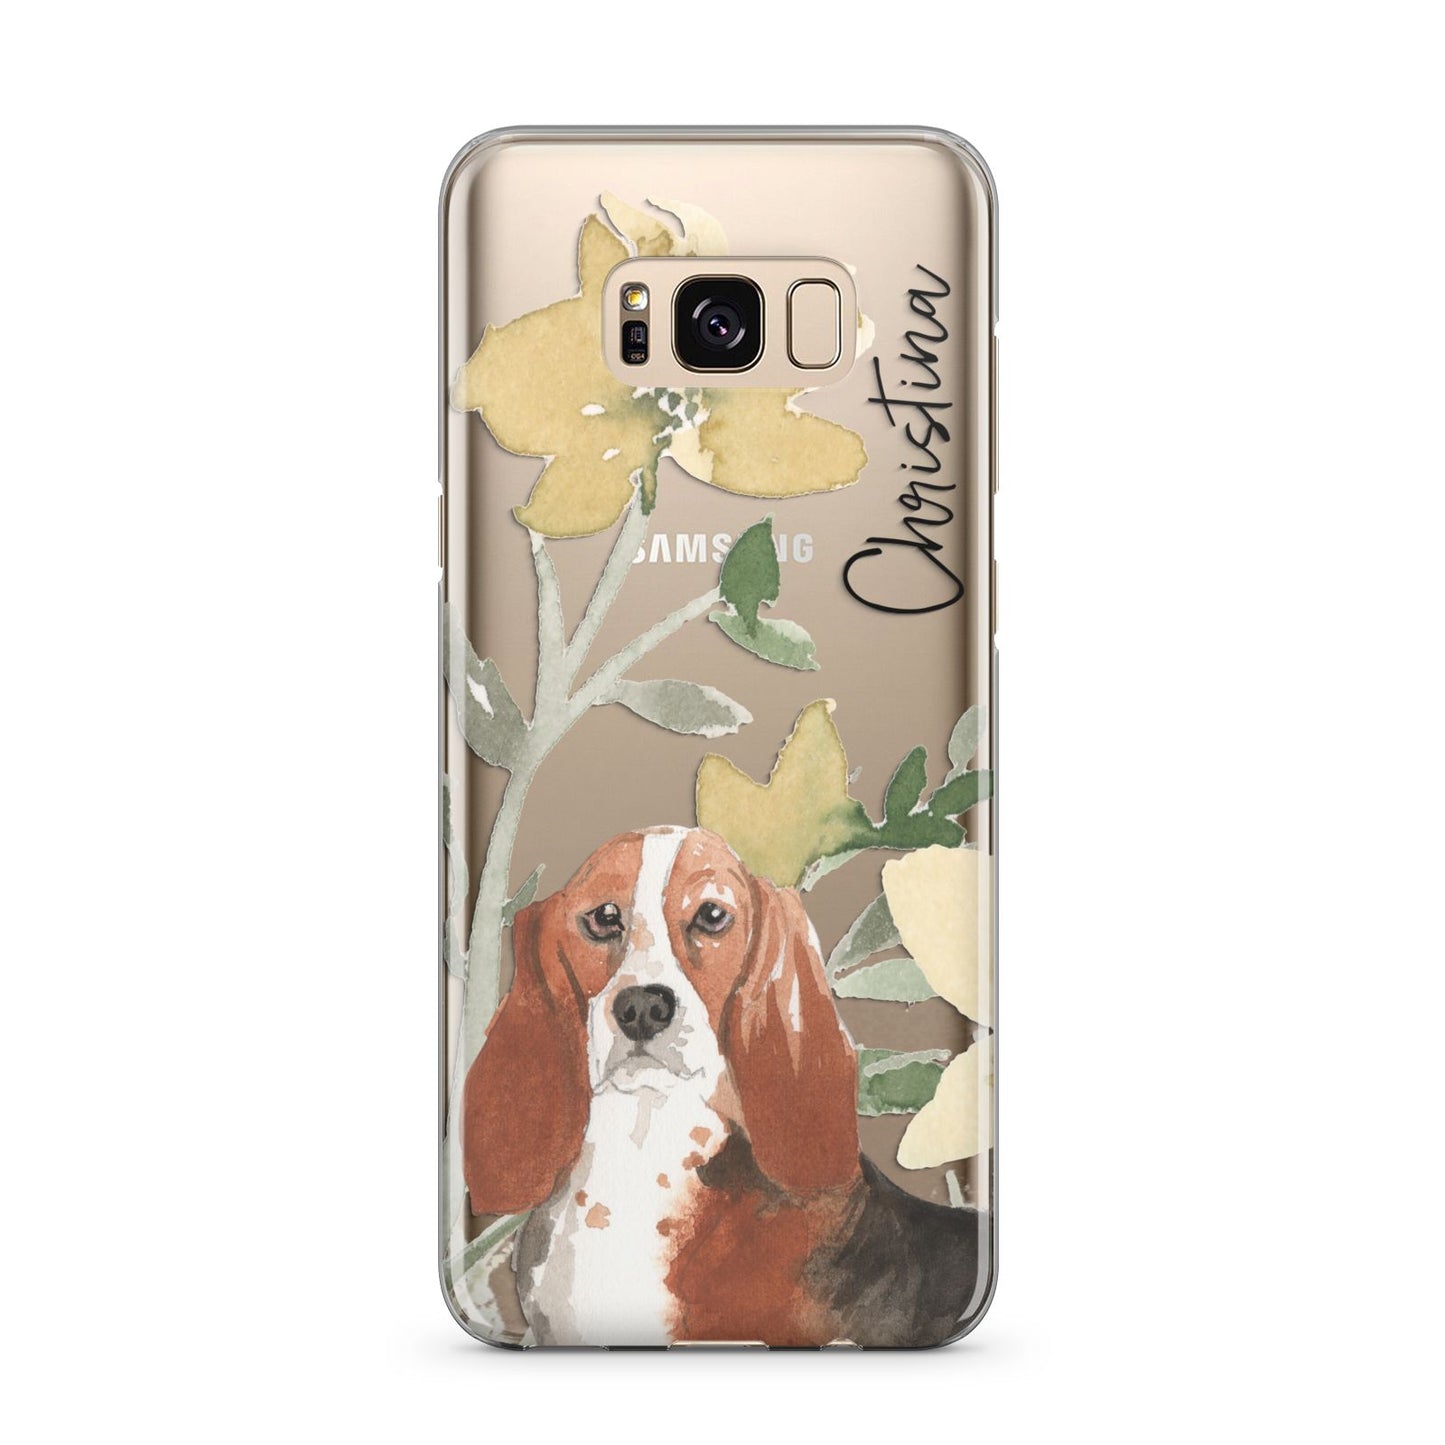 Personalised Basset Hound Dog Samsung Galaxy S8 Plus Case